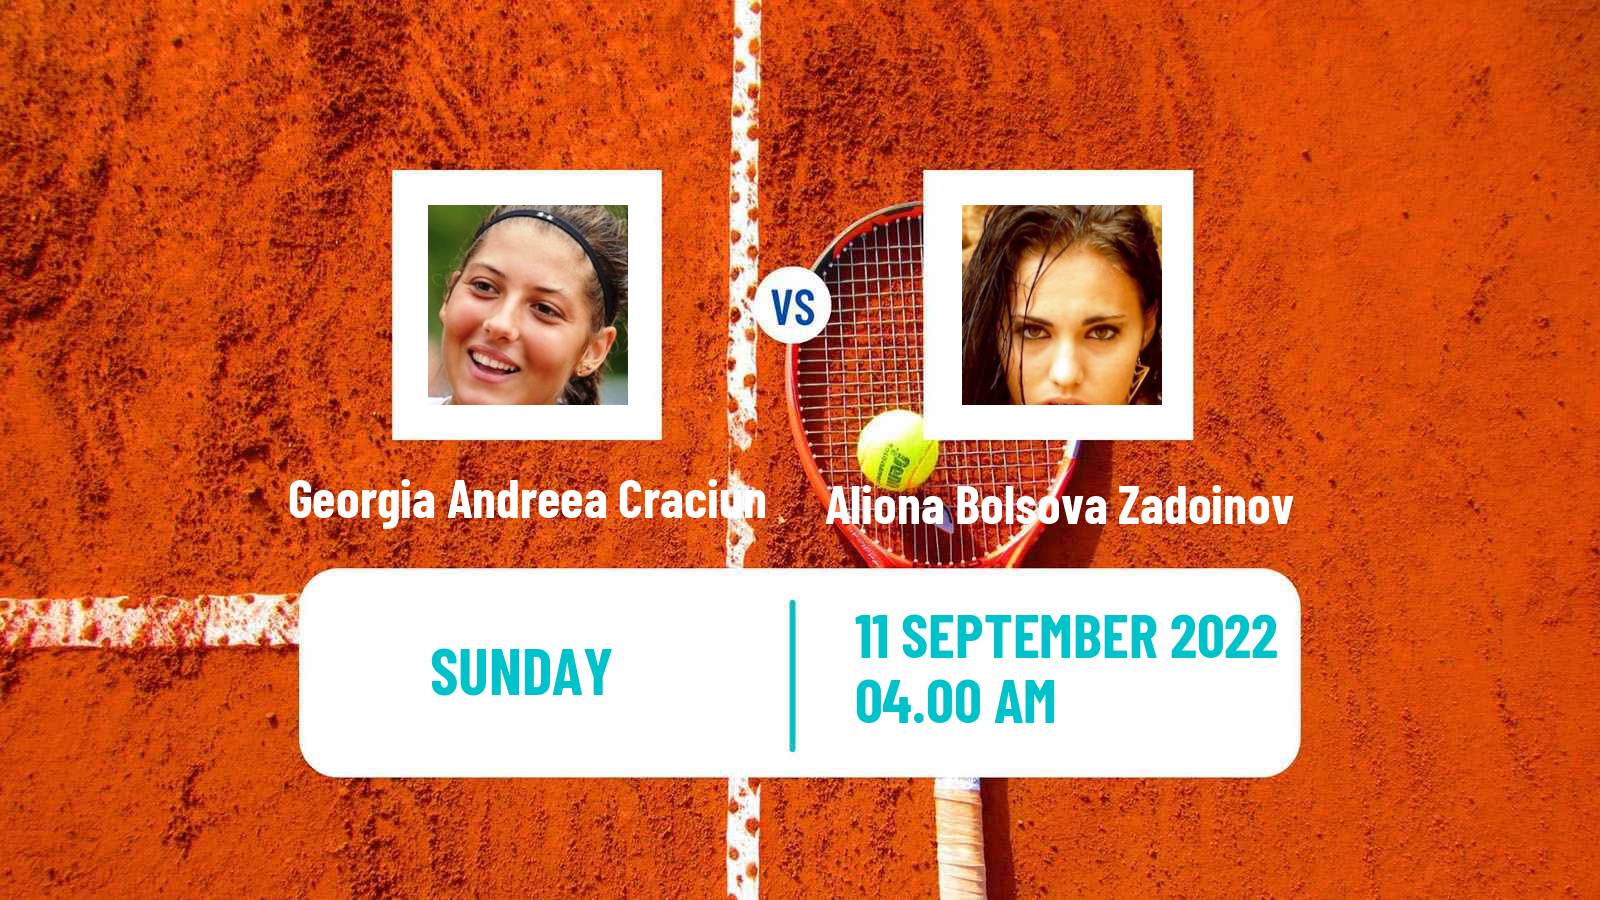 Tennis ATP Challenger Georgia Andreea Craciun - Aliona Bolsova Zadoinov